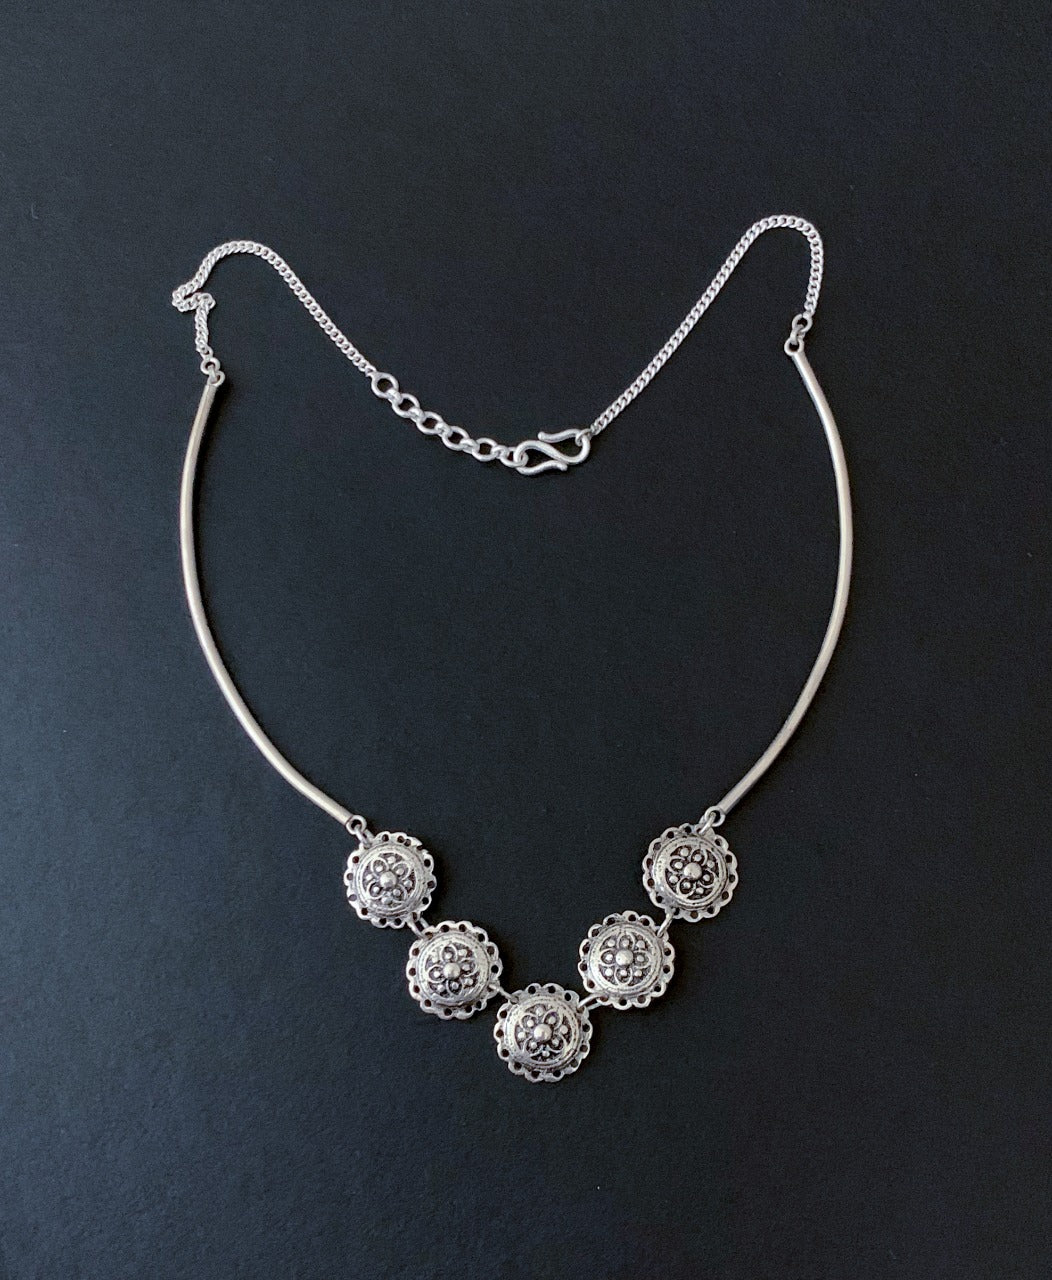 Handmade old-look flower design lightweight necklace